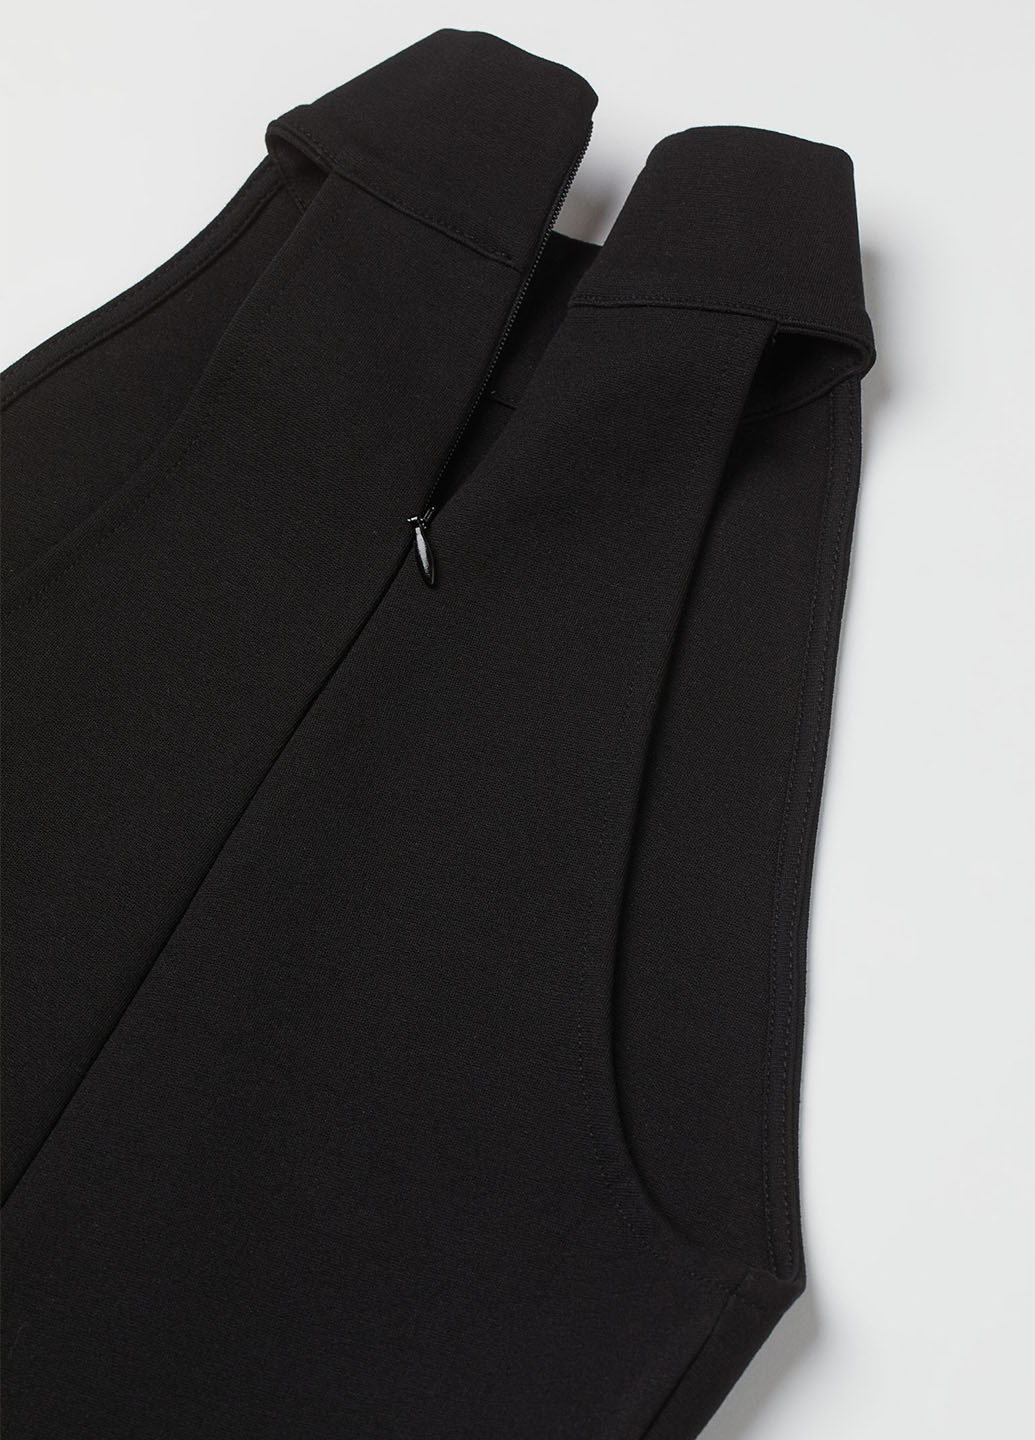 Комбинезон H&M комбинезон-шорты однотонный чёрный кэжуал вискоза, трикотаж